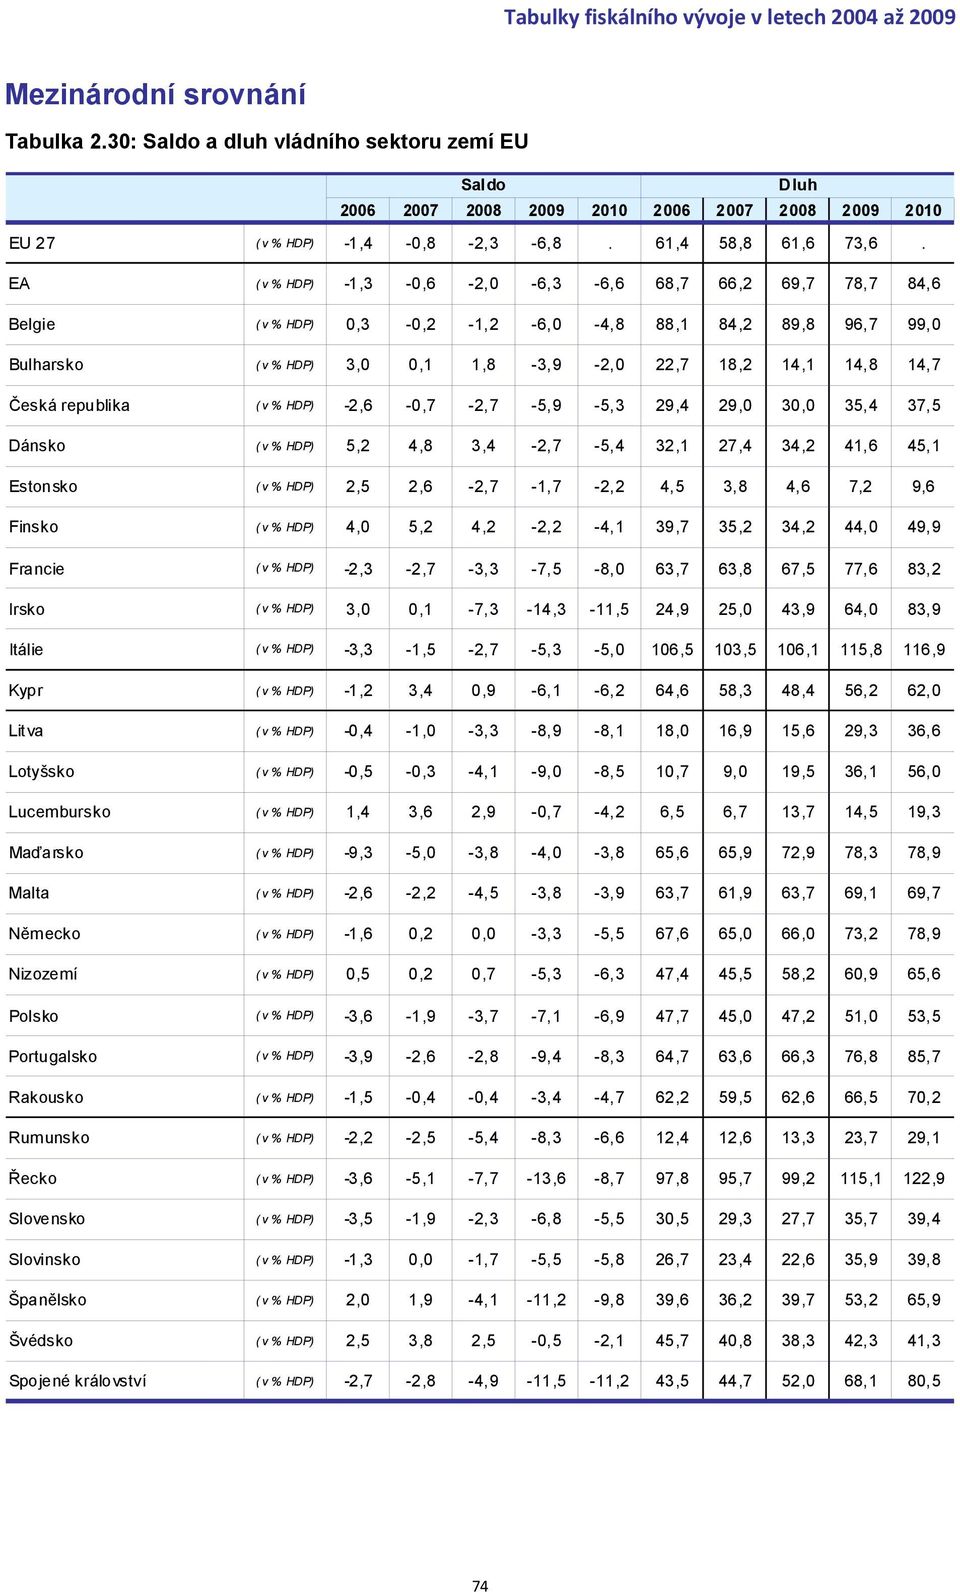 republika ( v % HDP) 2,6 0,7 2,7 5,9 5,3 29,4 29,0 30,0 35,4 37,5 Dánsko ( v % HDP) 5,2 4,8 3,4 2,7 5,4 32,1 27,4 34,2 41,6 45,1 Estonsko ( v % HDP) 2,5 2,6 2,7 1,7 2,2 4,5 3,8 4,6 7,2 9,6 Finsko ( v